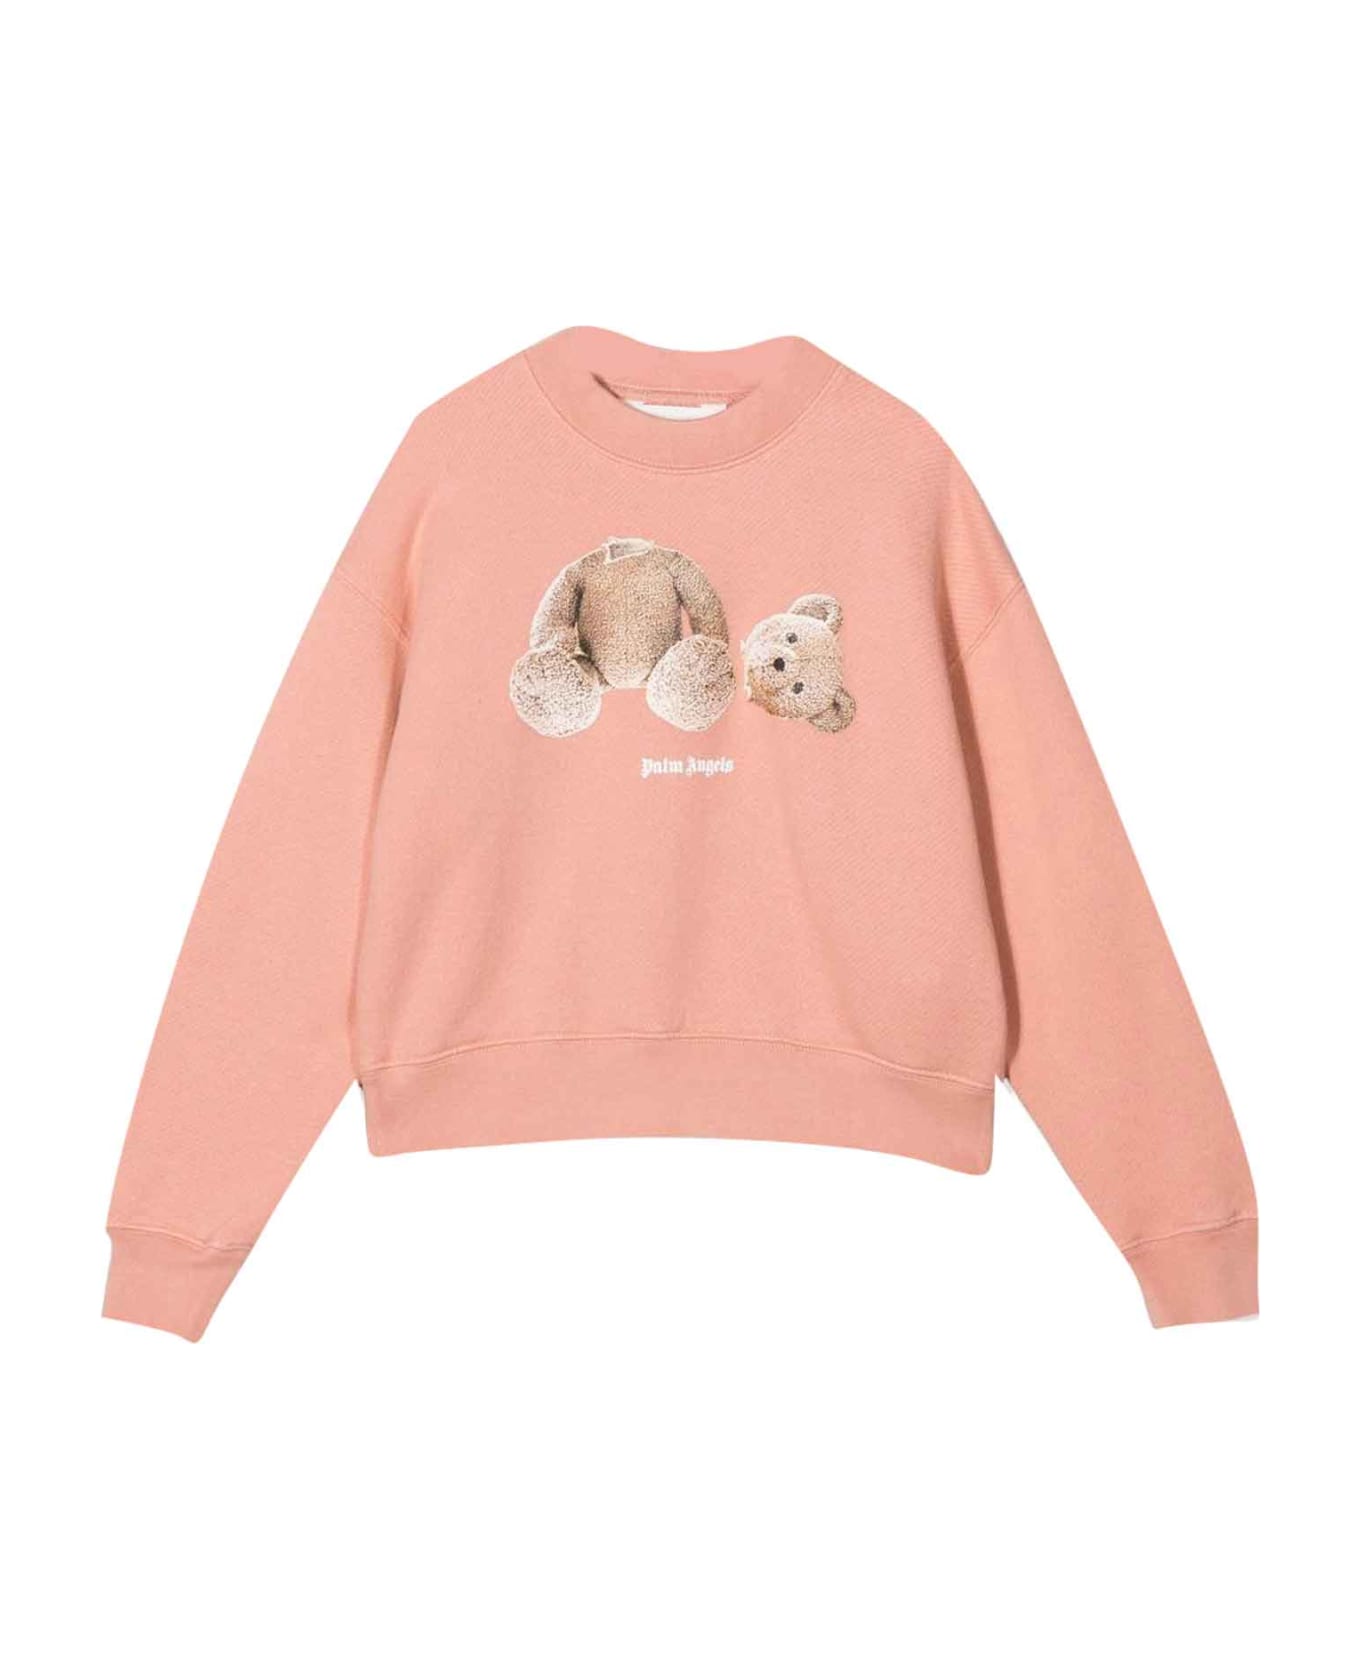 Palm Angels Girl Sweatshirt Print With Teddy - Pink Brown